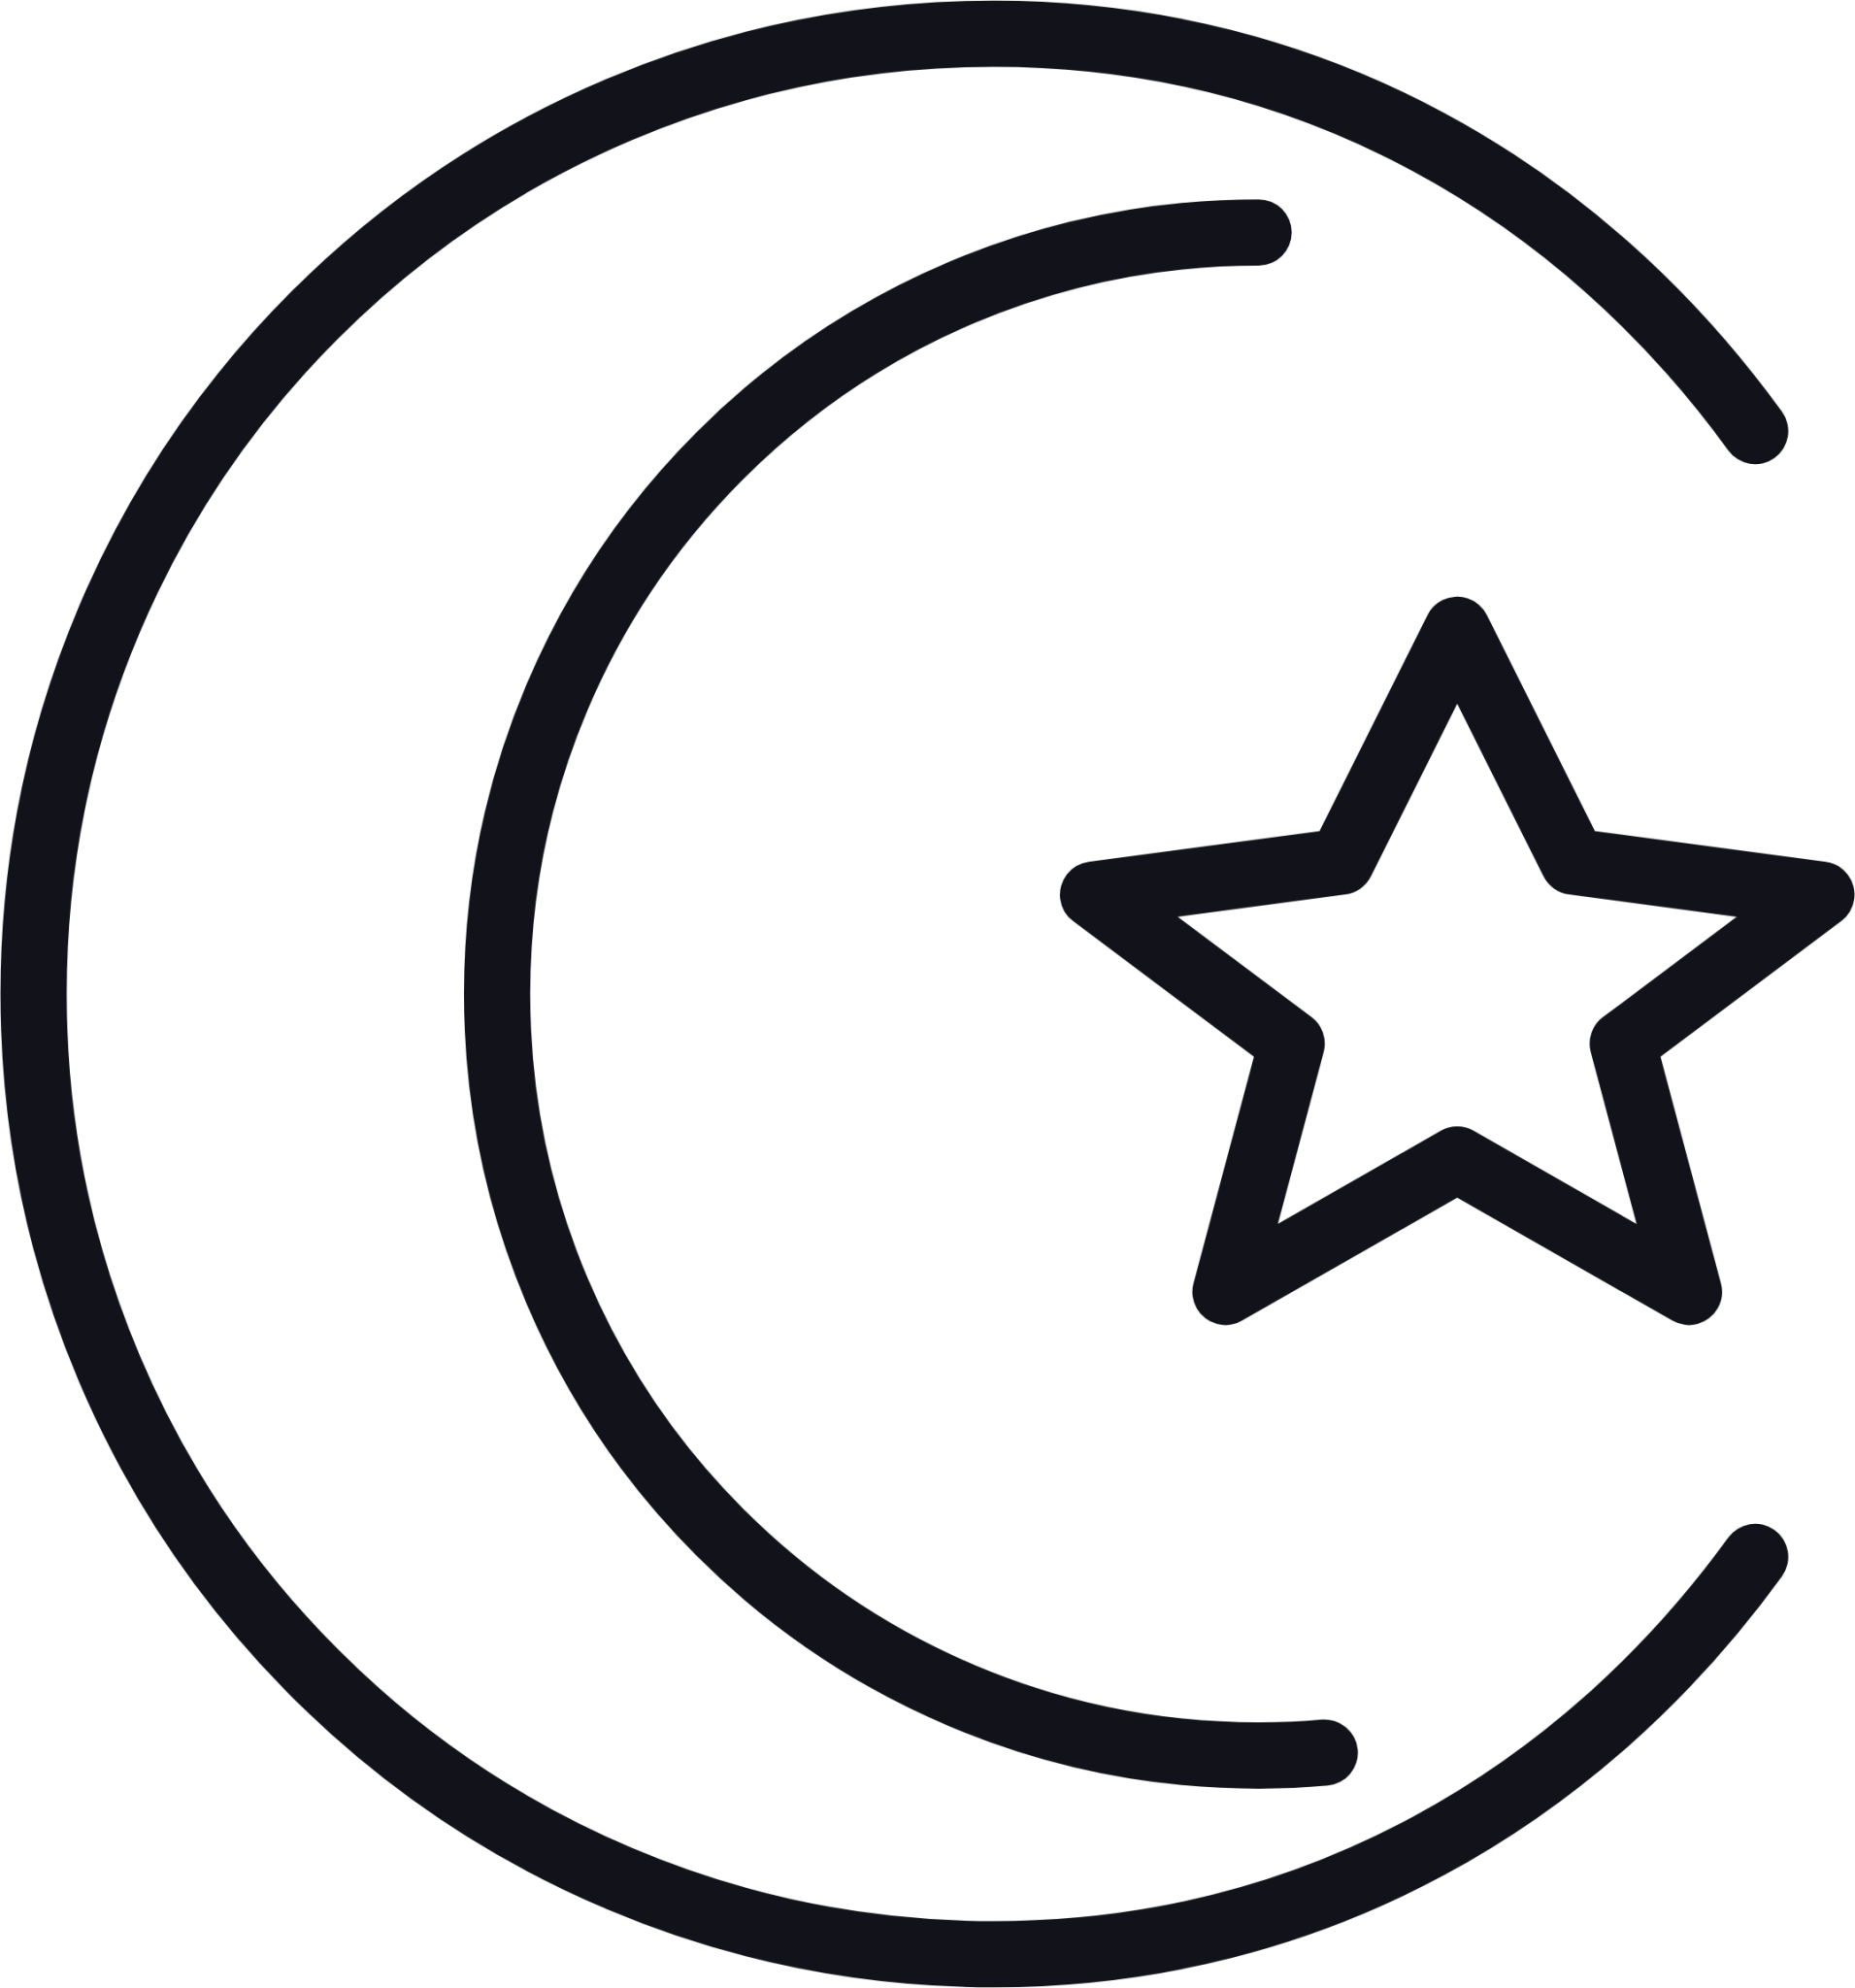 muslims symbol